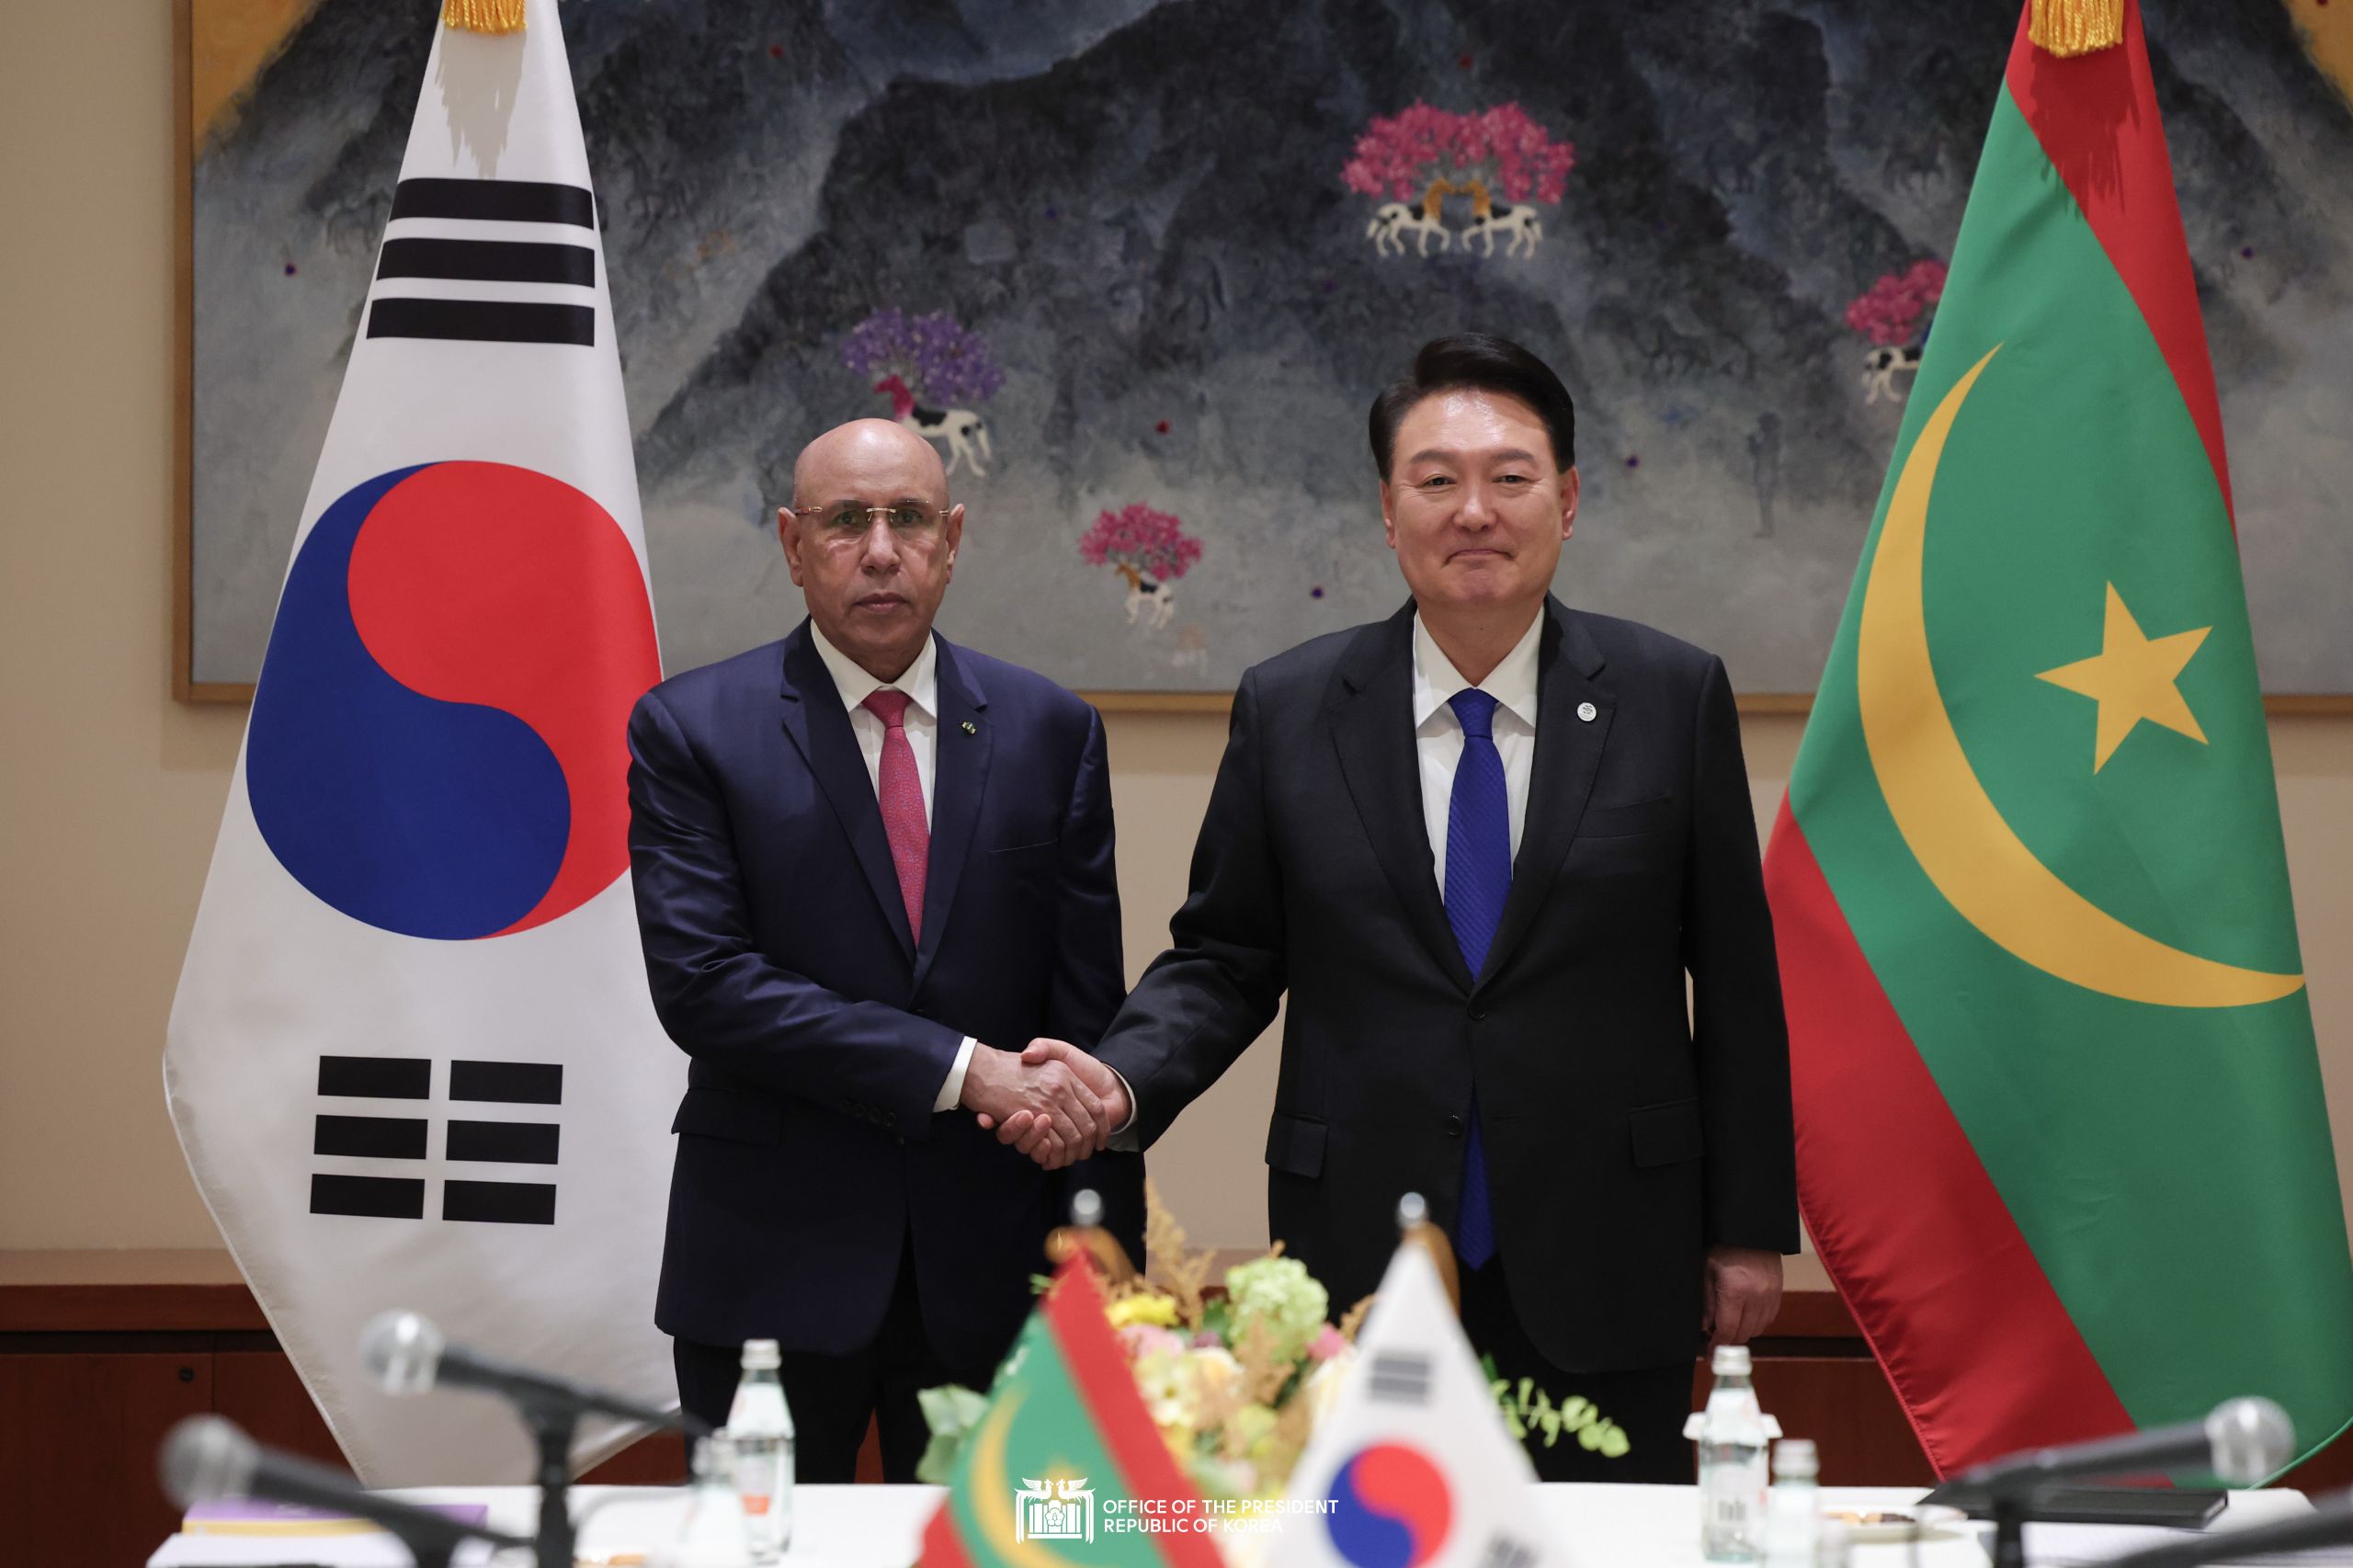 Korea-Mauritania Summit in New York slide 1